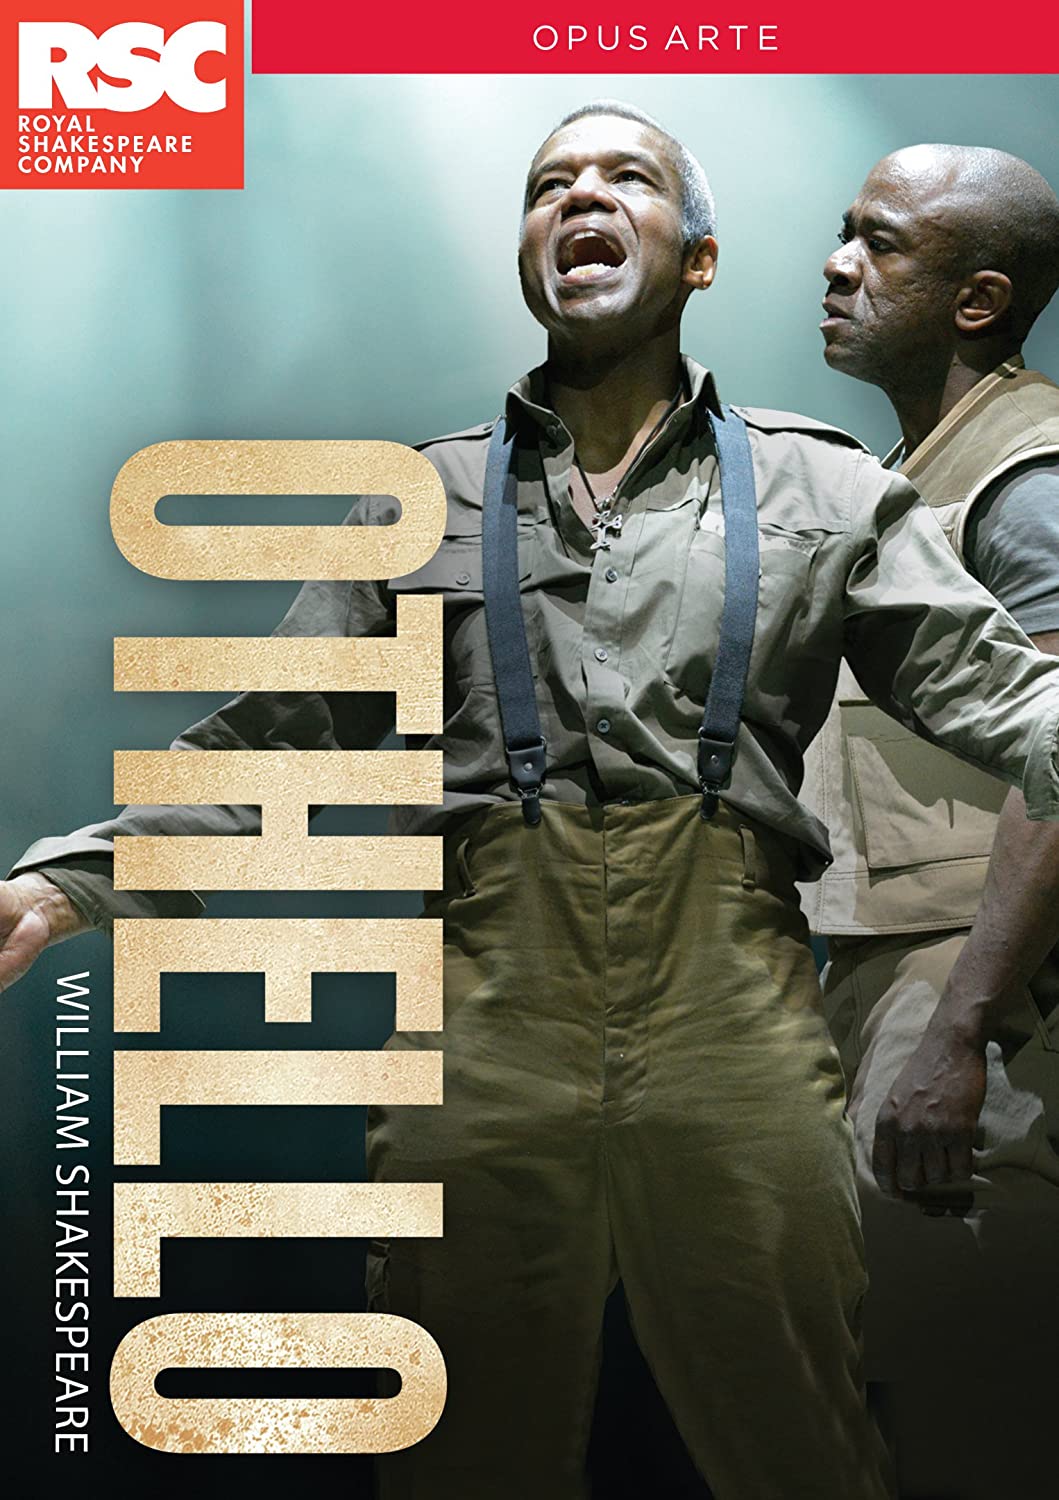 Shakespeare:Othello [Hugh Quarshie; Lucian Msamati; Joanna Vanderham; Jacob Fortune-Lloyd,Iqbal Khan ] [OPUS ARTE: OA1154D] [2016] - Drama [DVD]